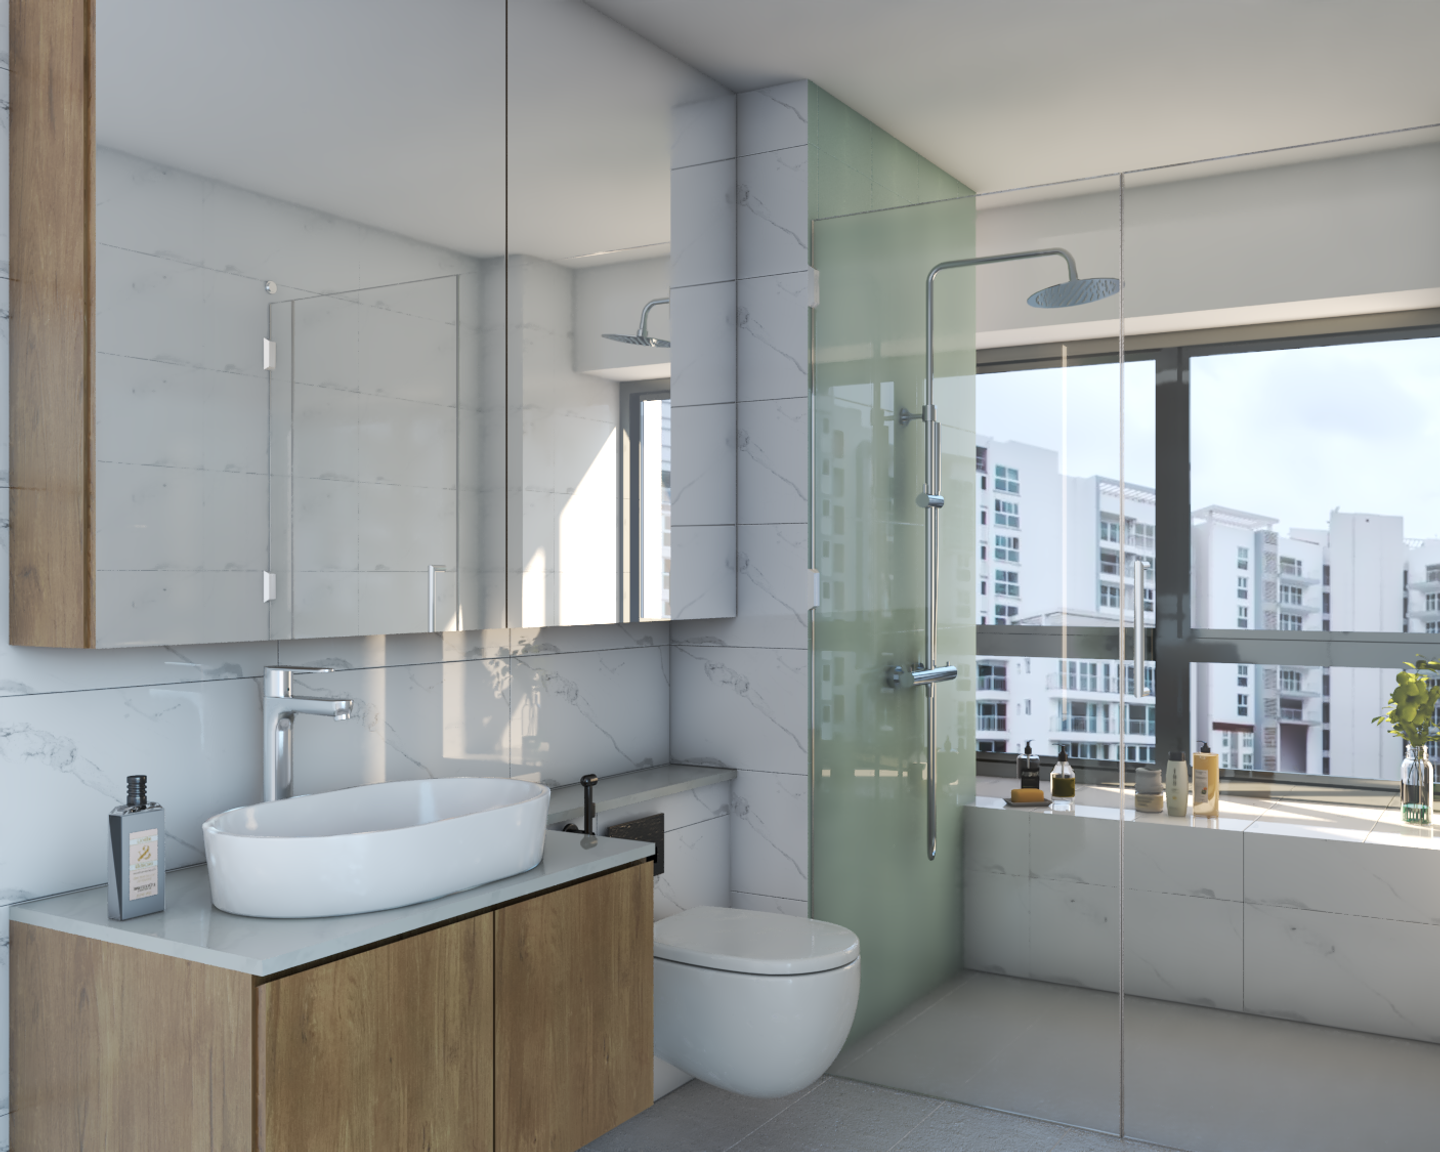 Large Windows Storage Green Wall Modern Bathroom Design - Livspace